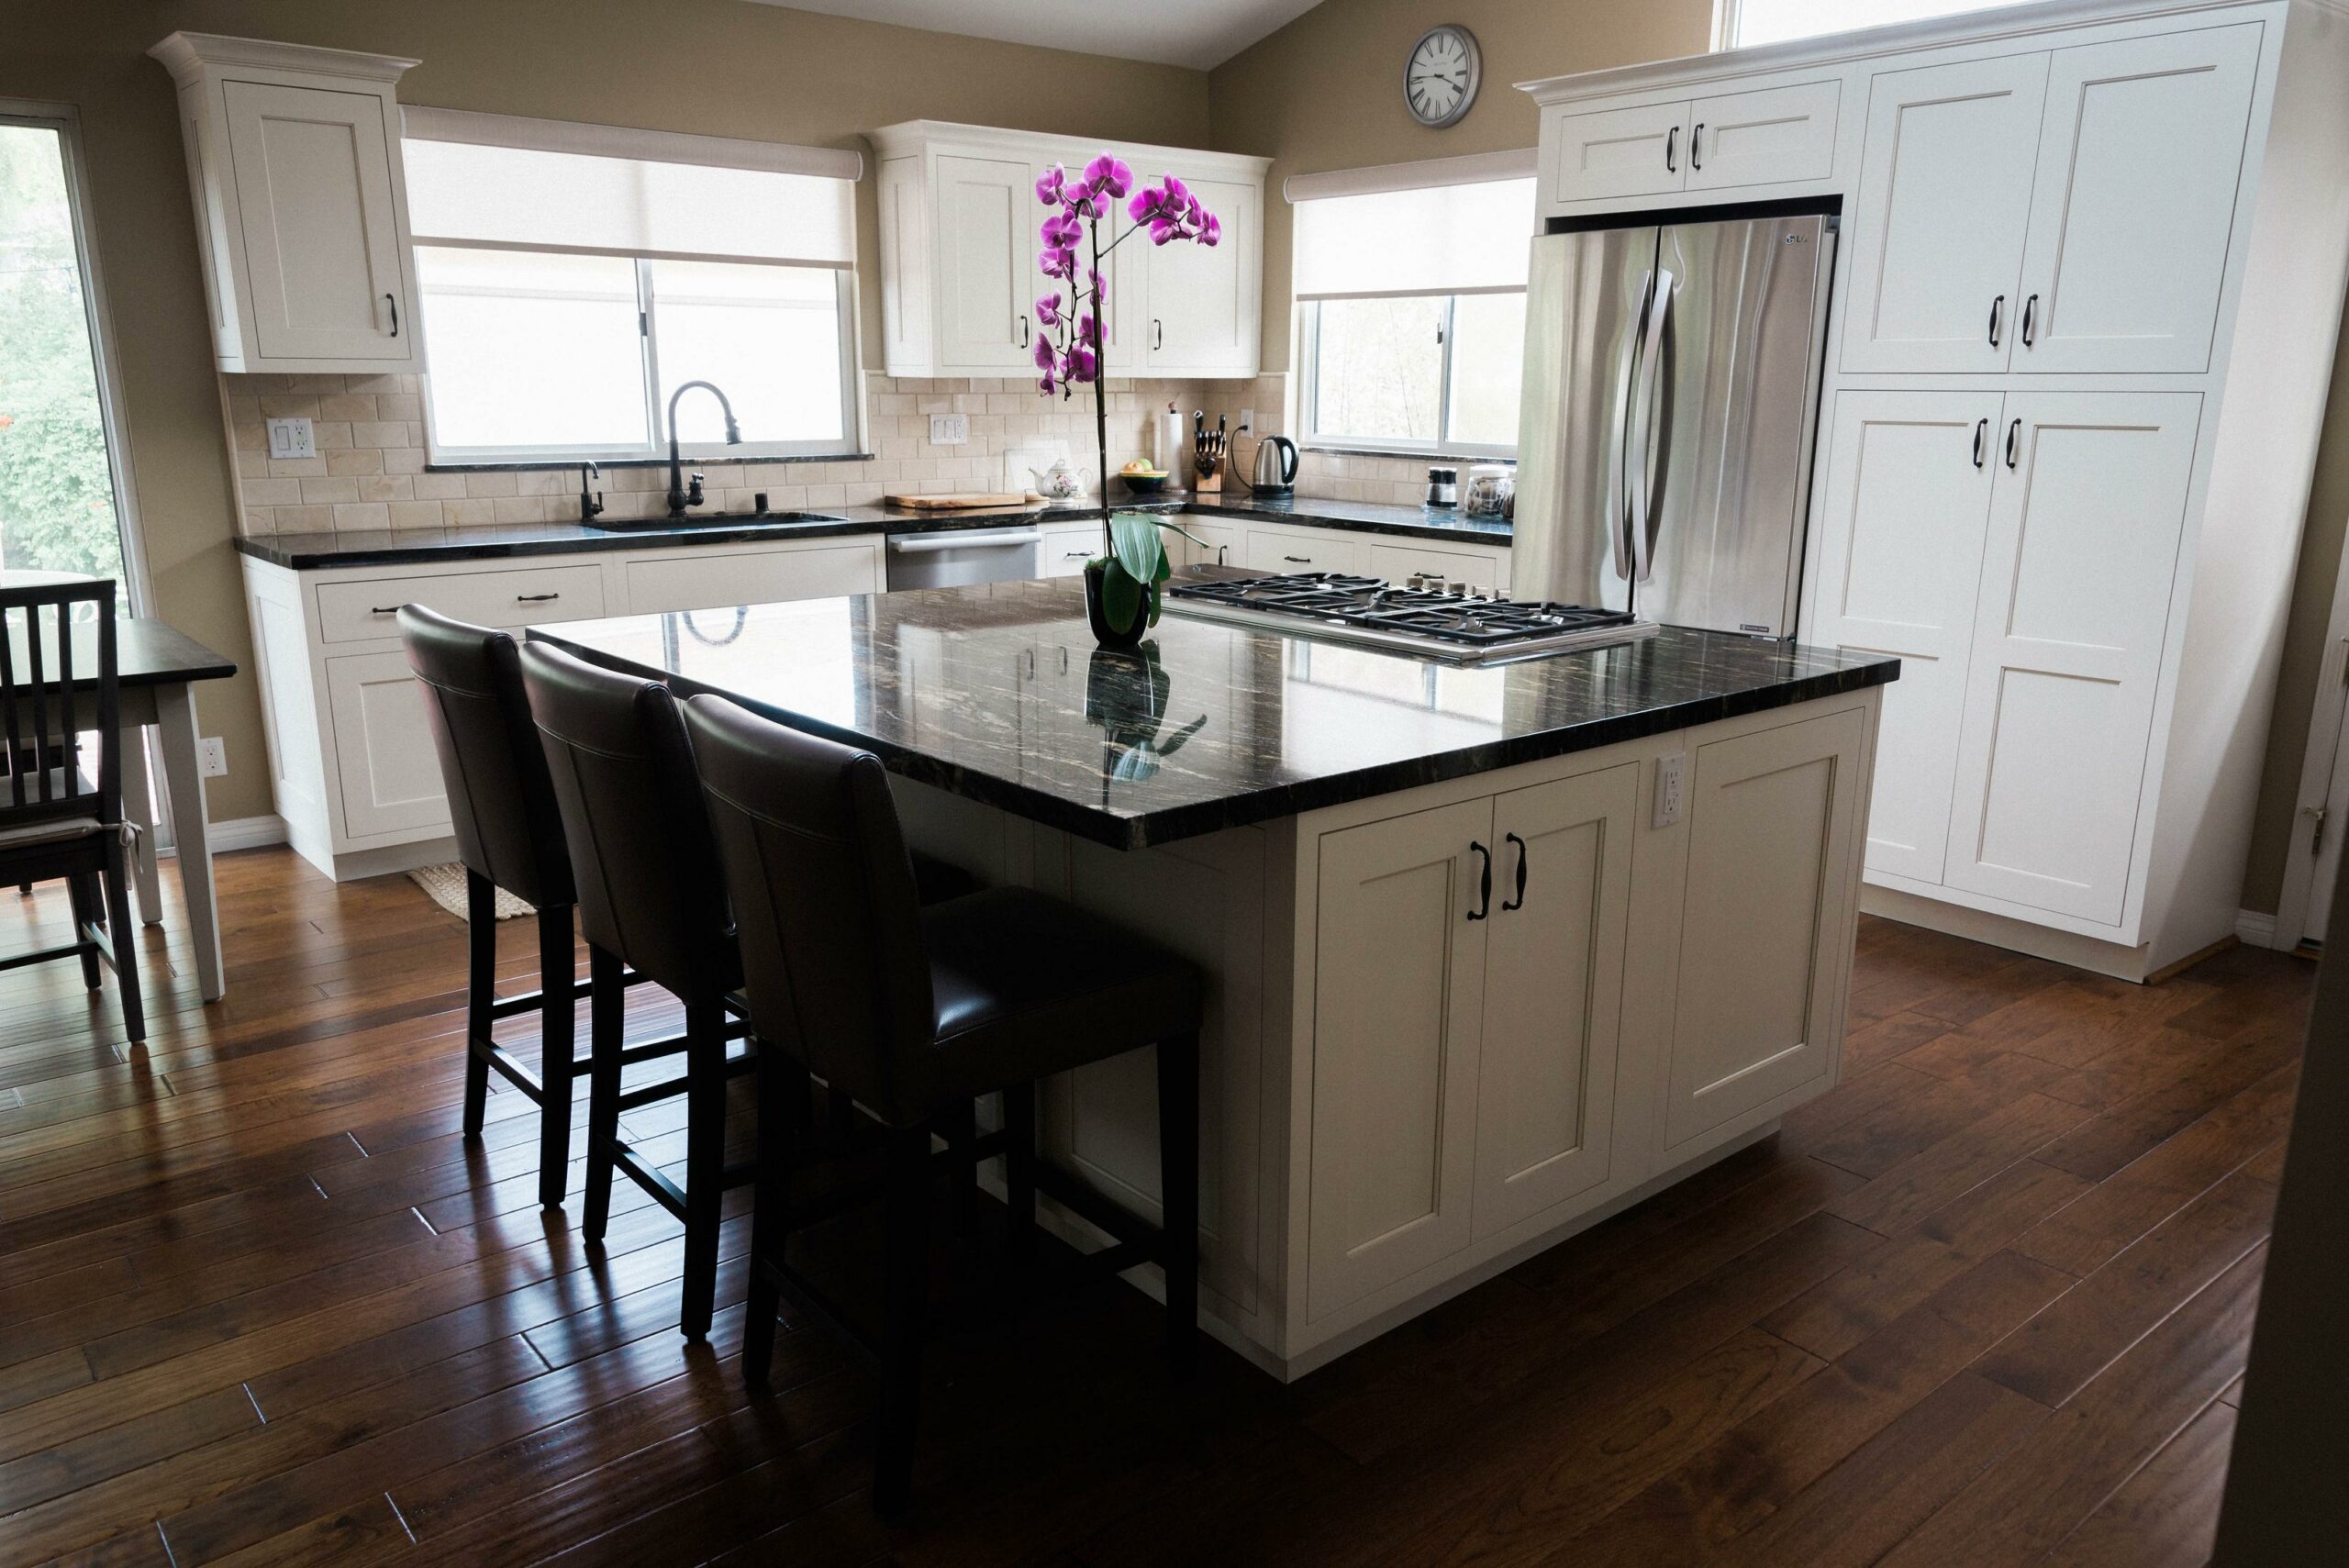 Modern kitchen, white cabinets, granite countertops, hardwood floors.